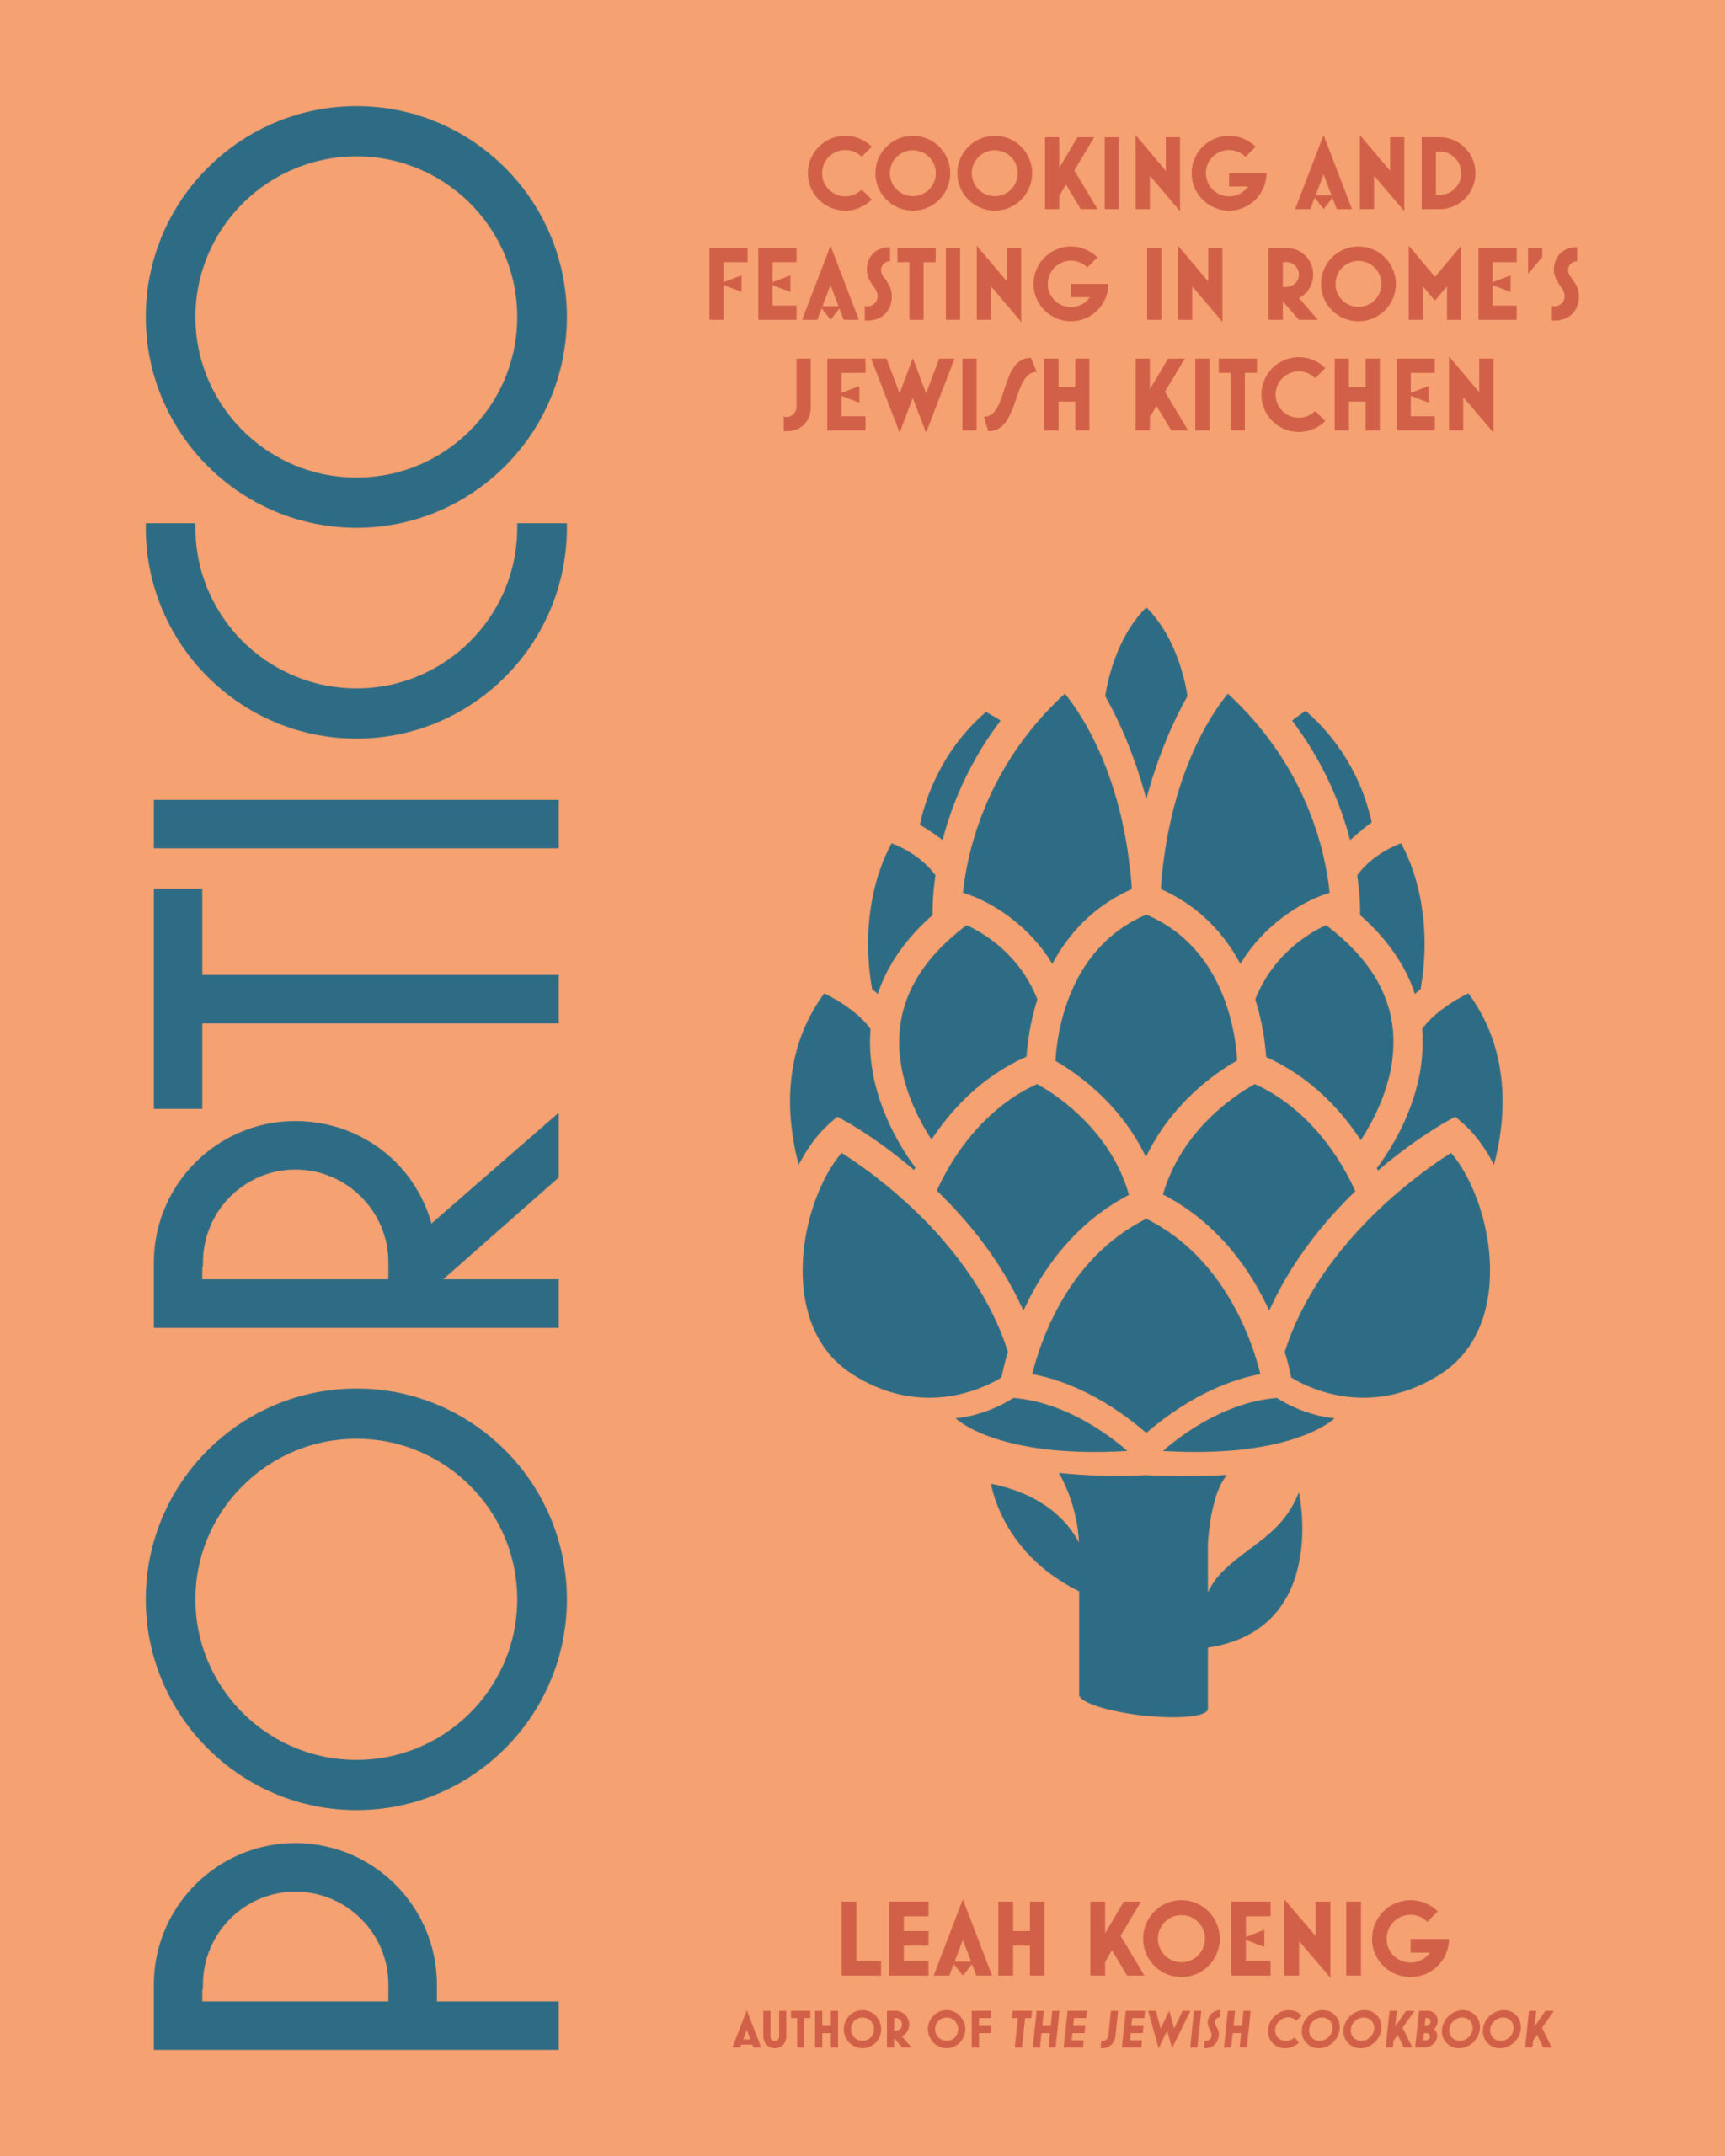 Cook Book Launch: Portico by Leah Koenig in conversation with Deb Perelman